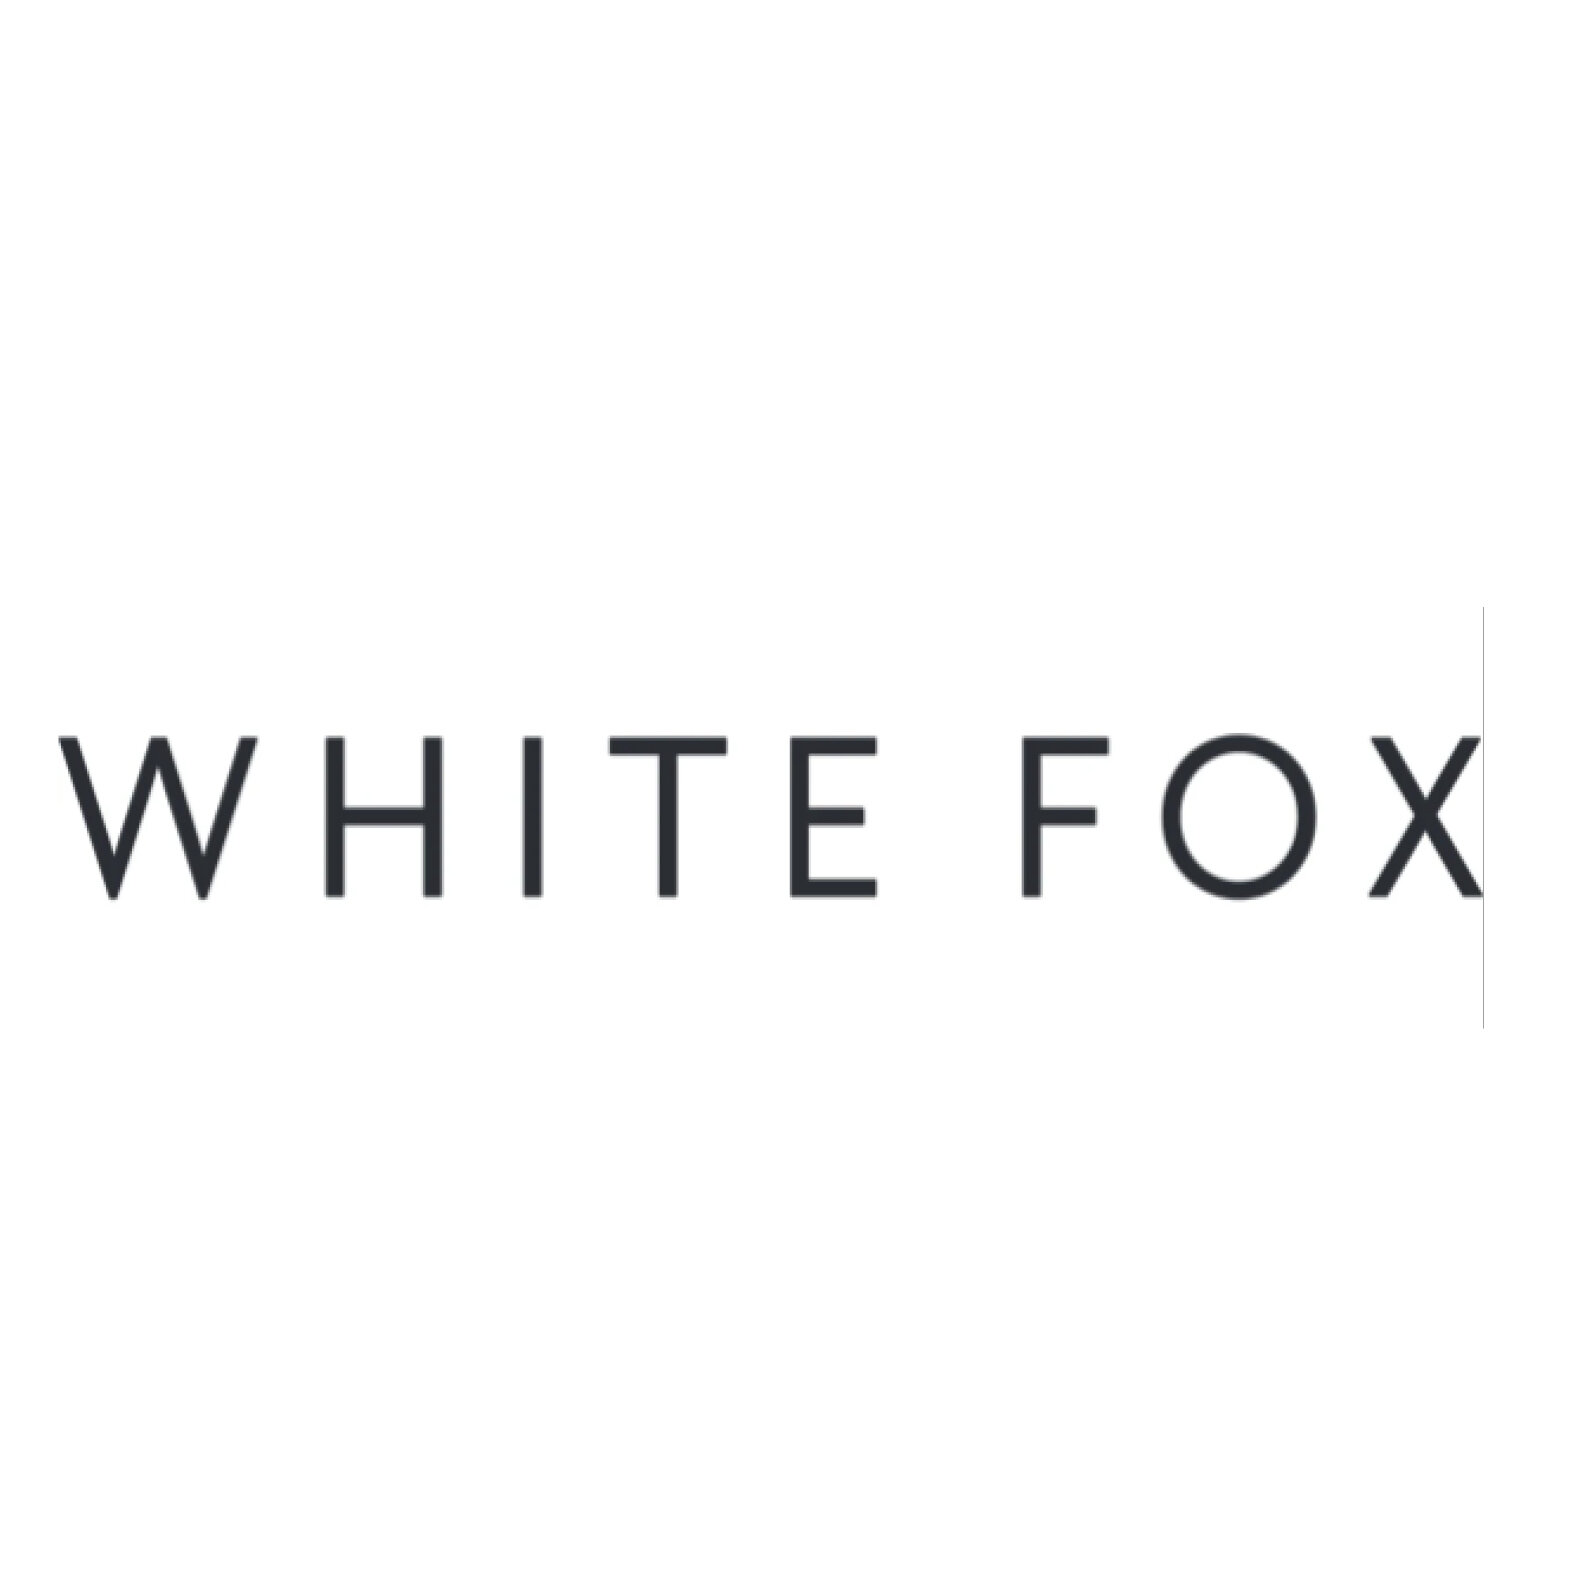 Jessica Abraham White Fox Logo.jpg